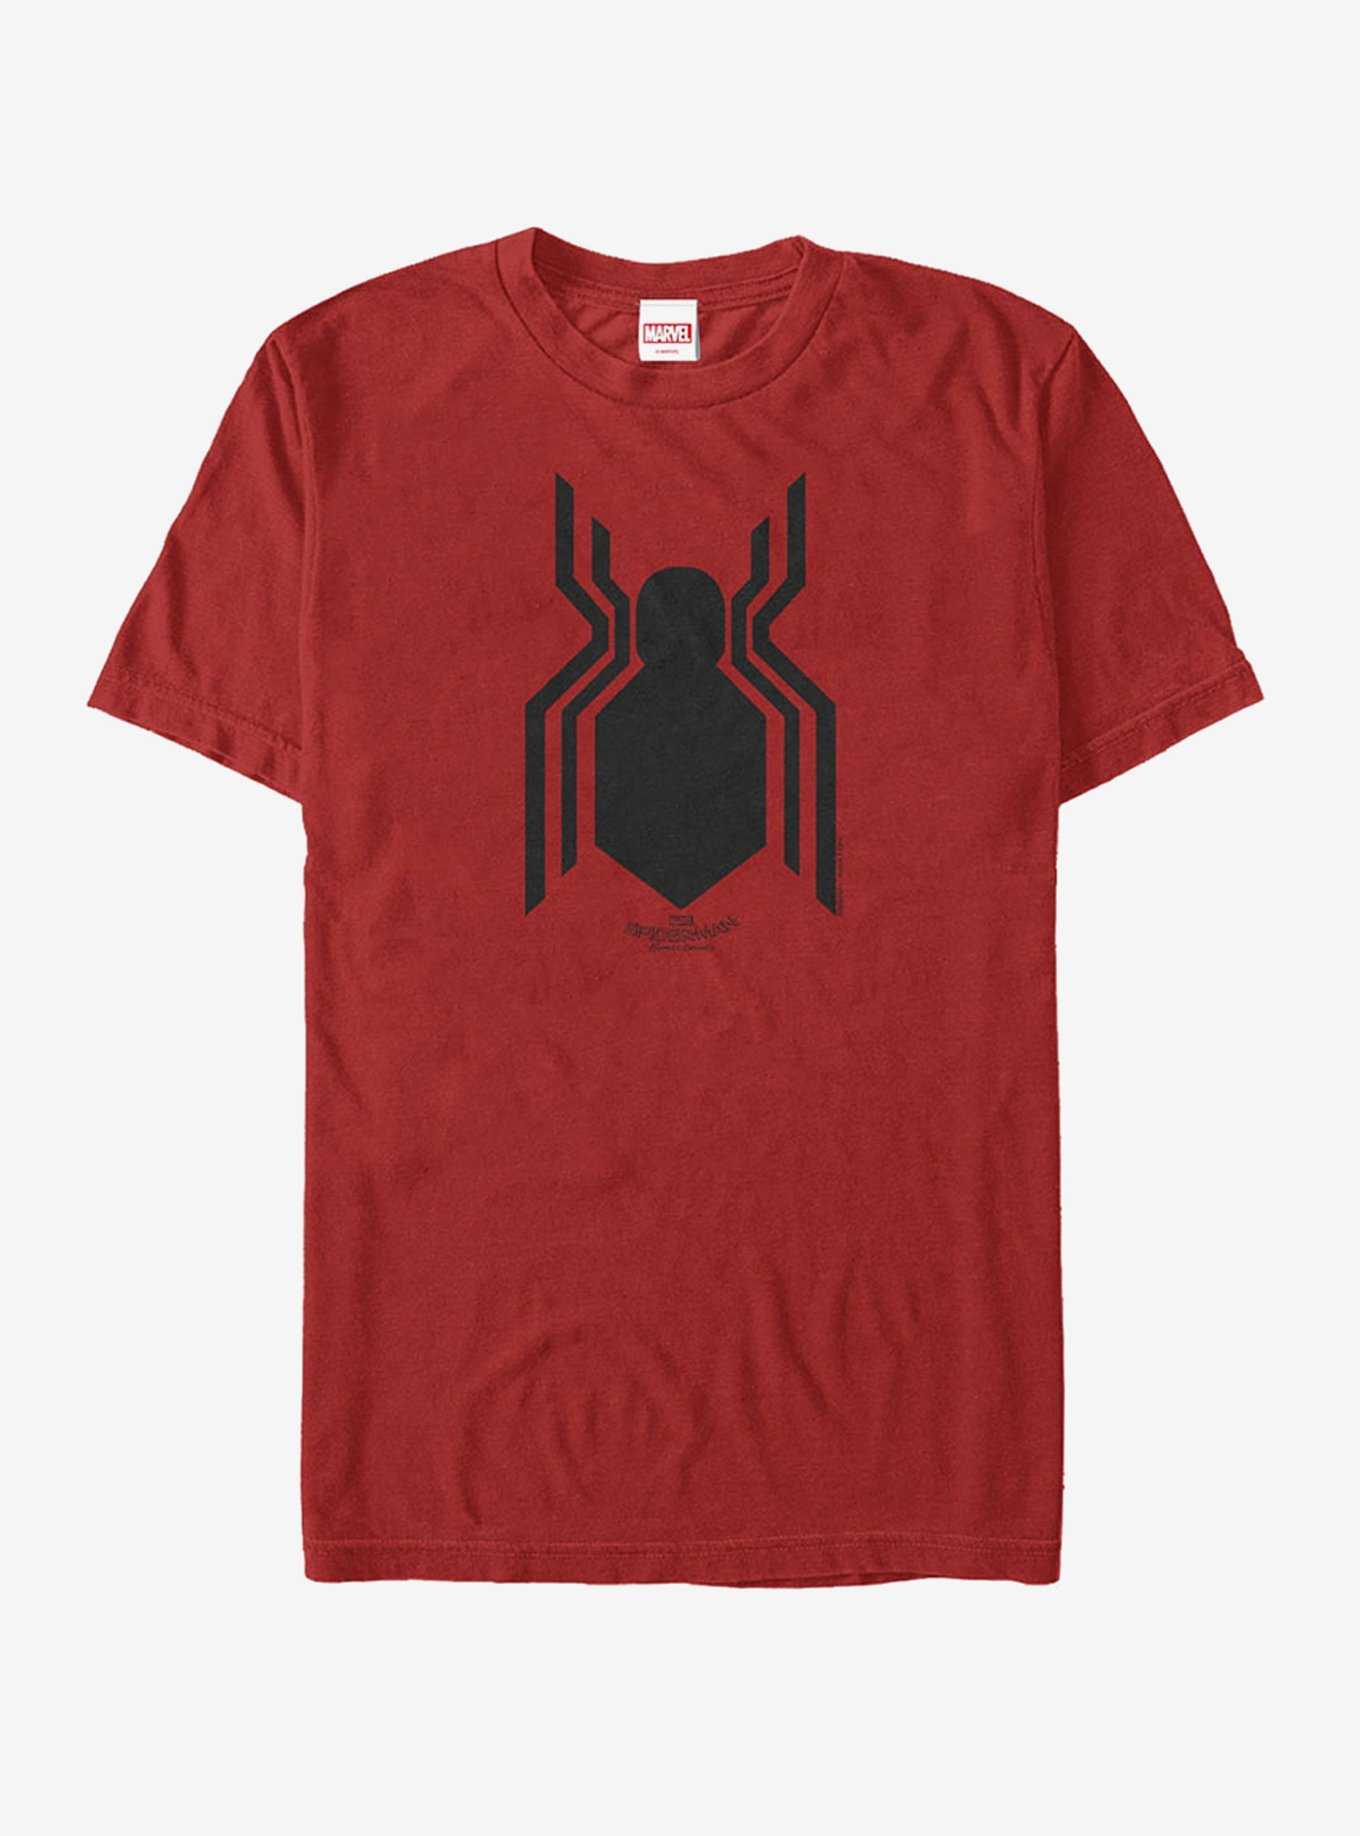 Marvel Spider-Man Homecoming Classic Logo T-Shirt, , hi-res